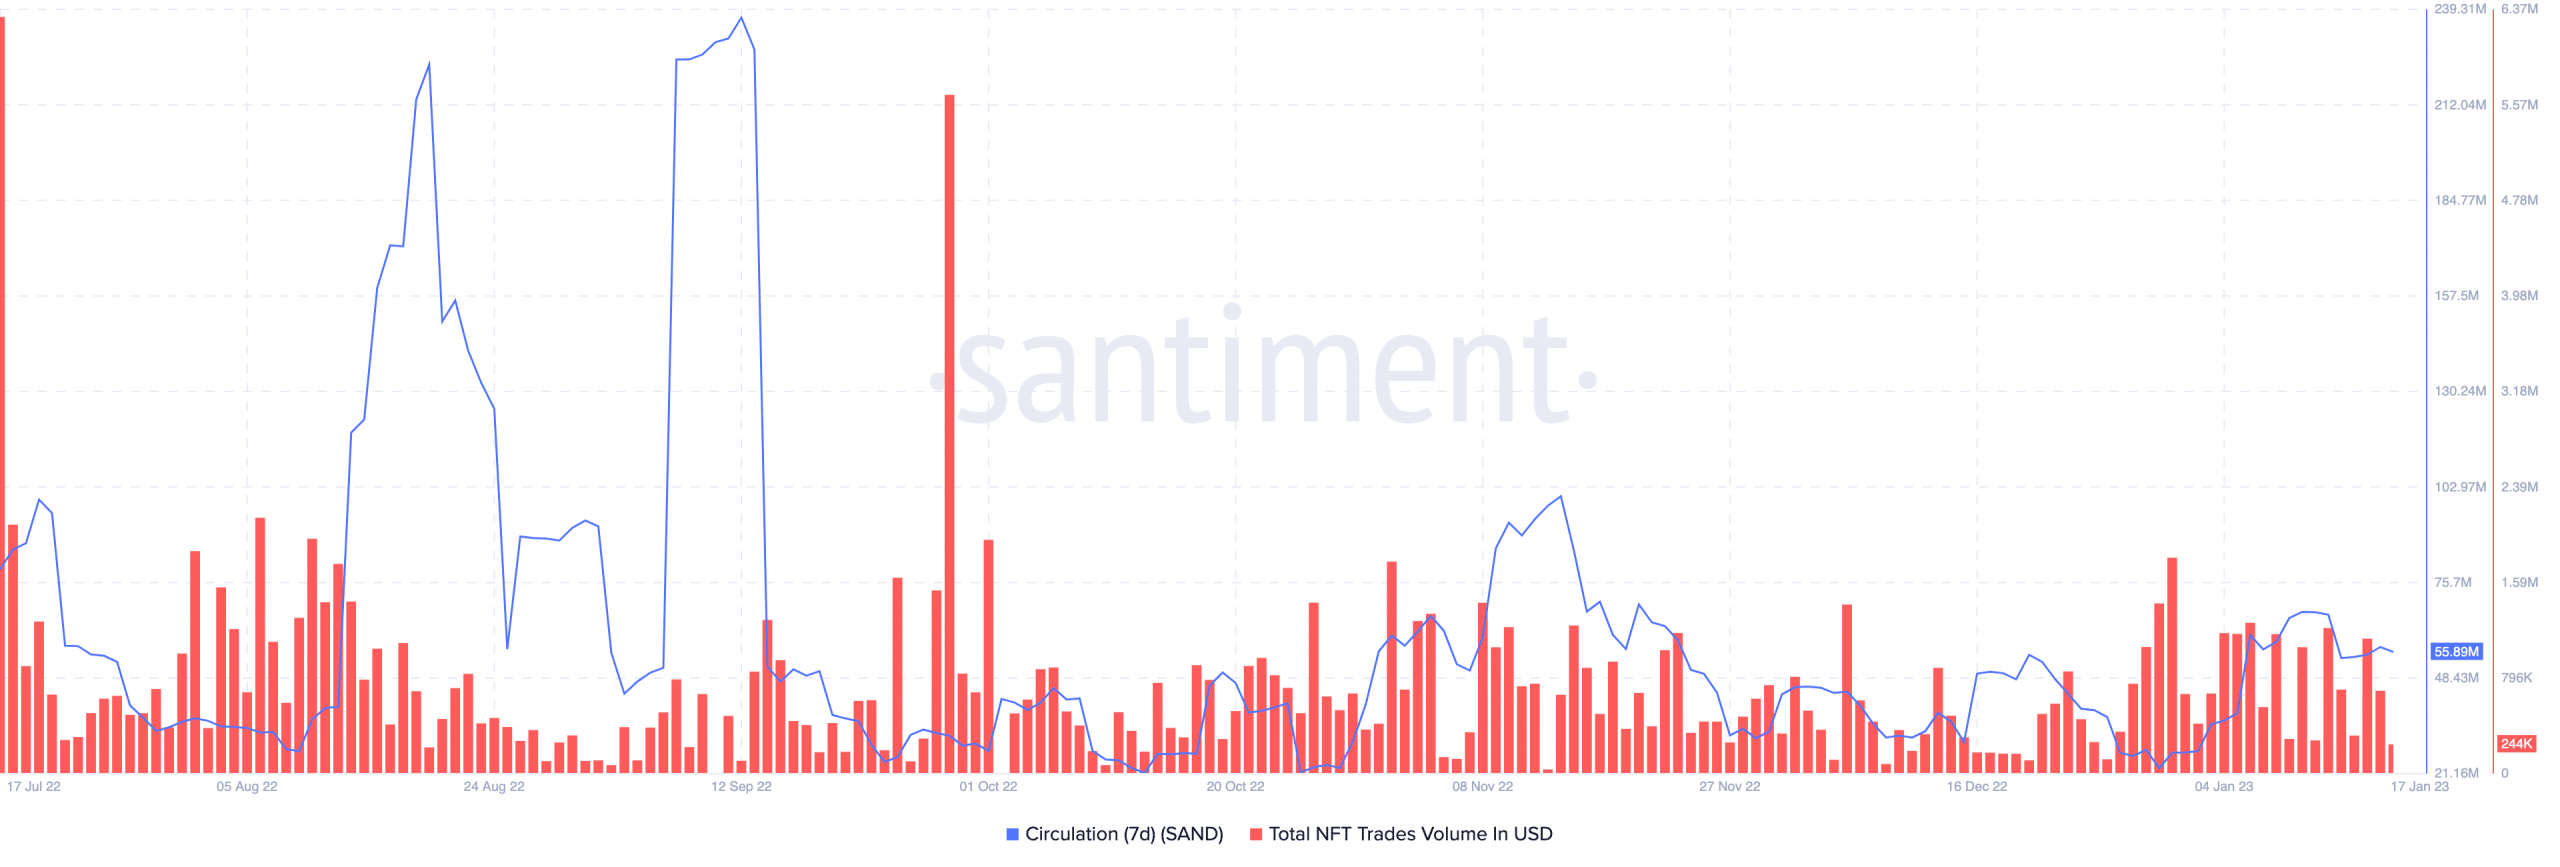 The Sandbox NFT trades volume and SAND circulation